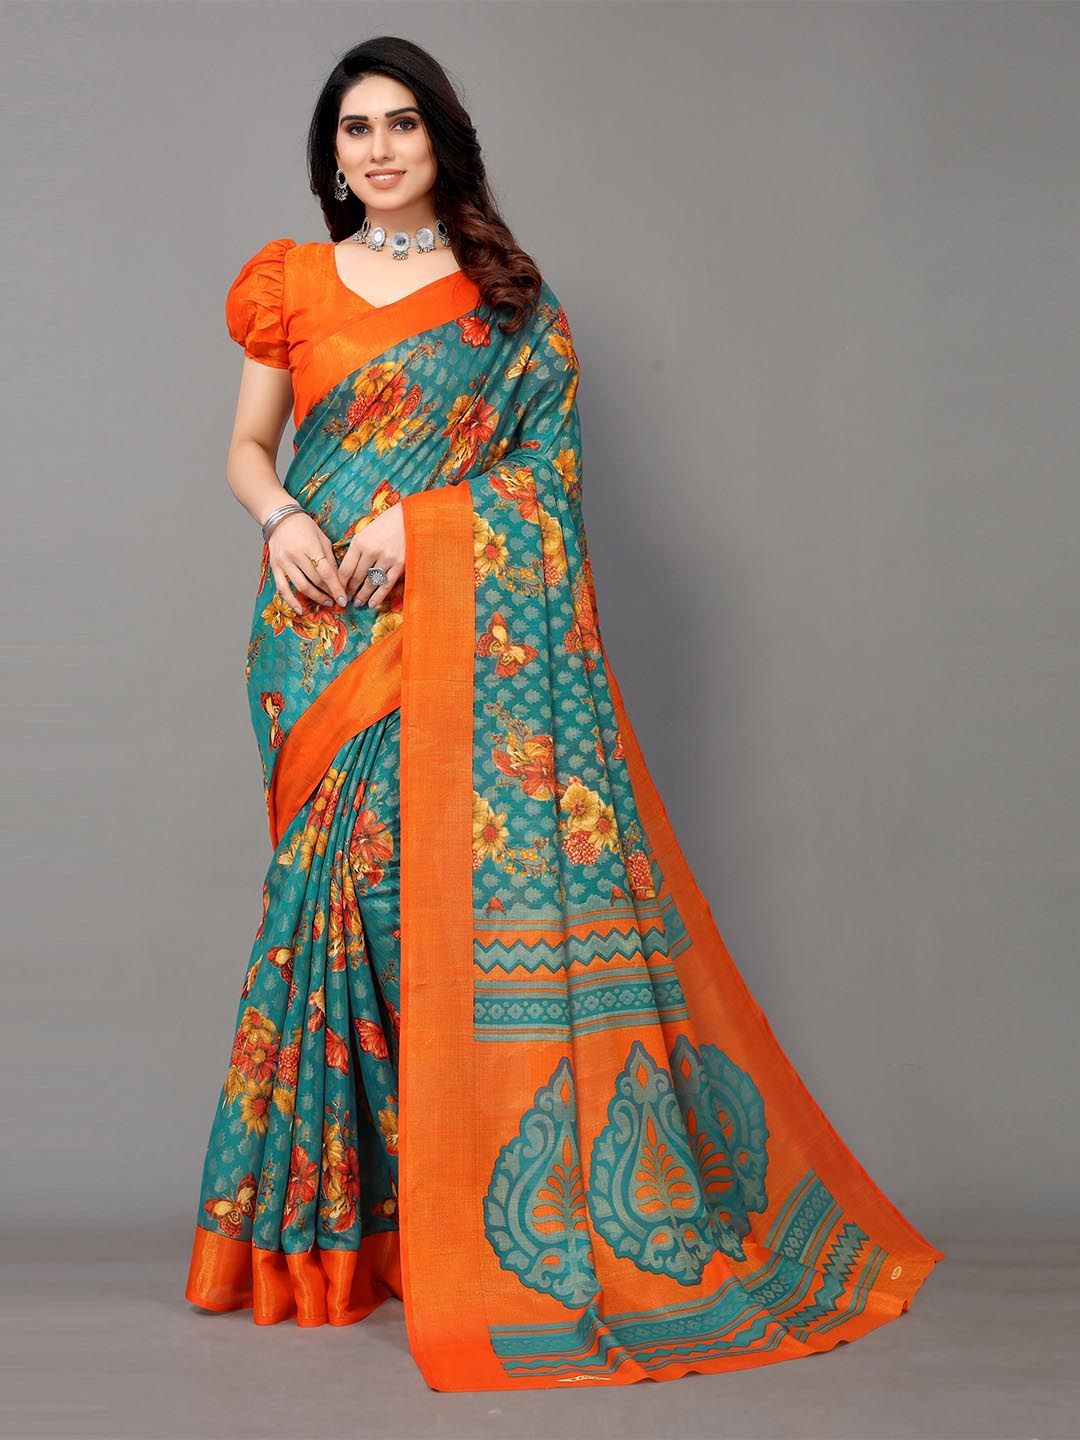 Winza Designer Teal & Orange Floral Pure Cotton Jamdani Saree Price in India